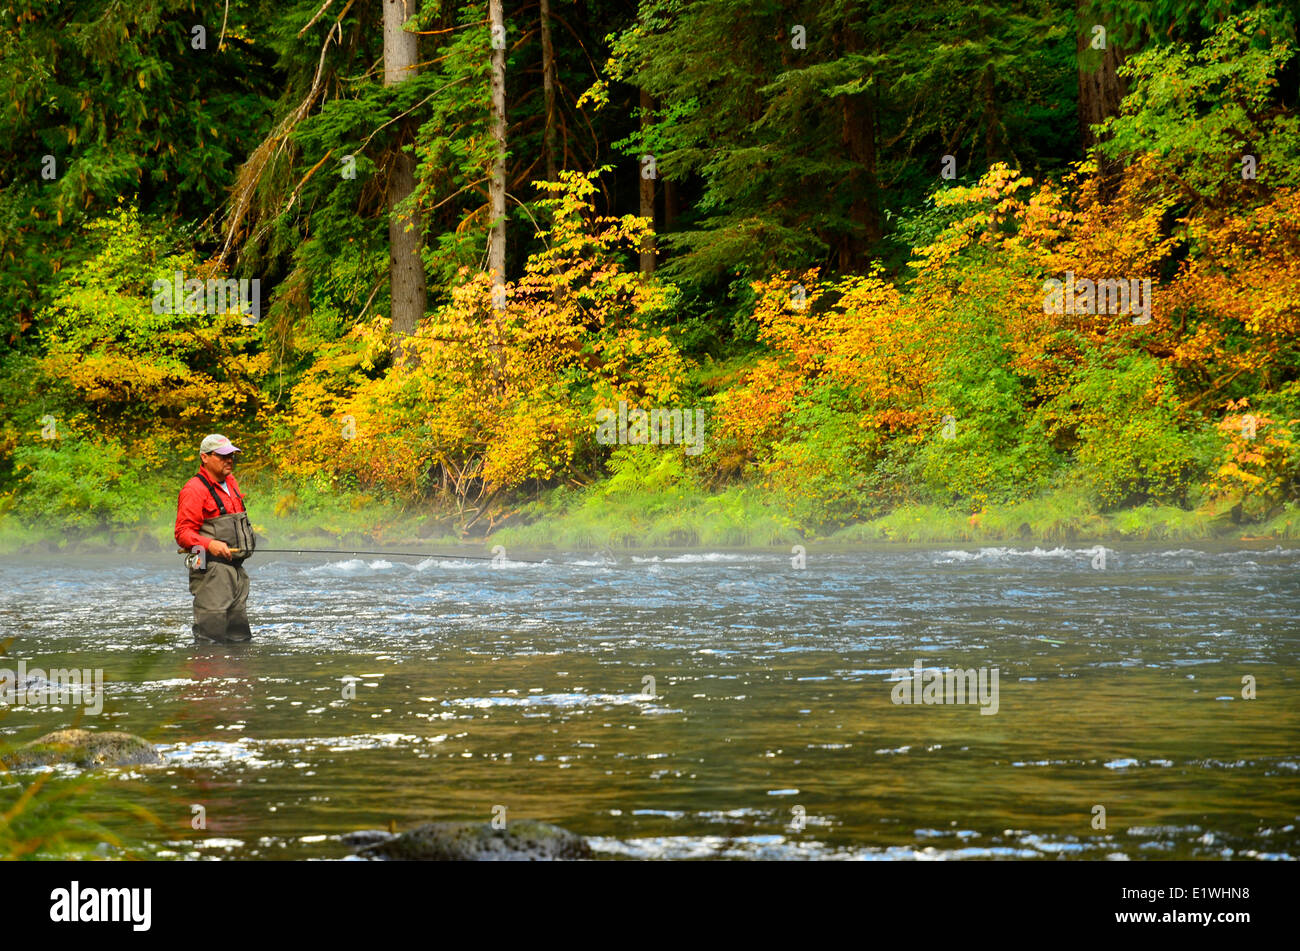 Fly fisherman in waders, Umqua River Oregon Steelhead Fishing Stock Photo